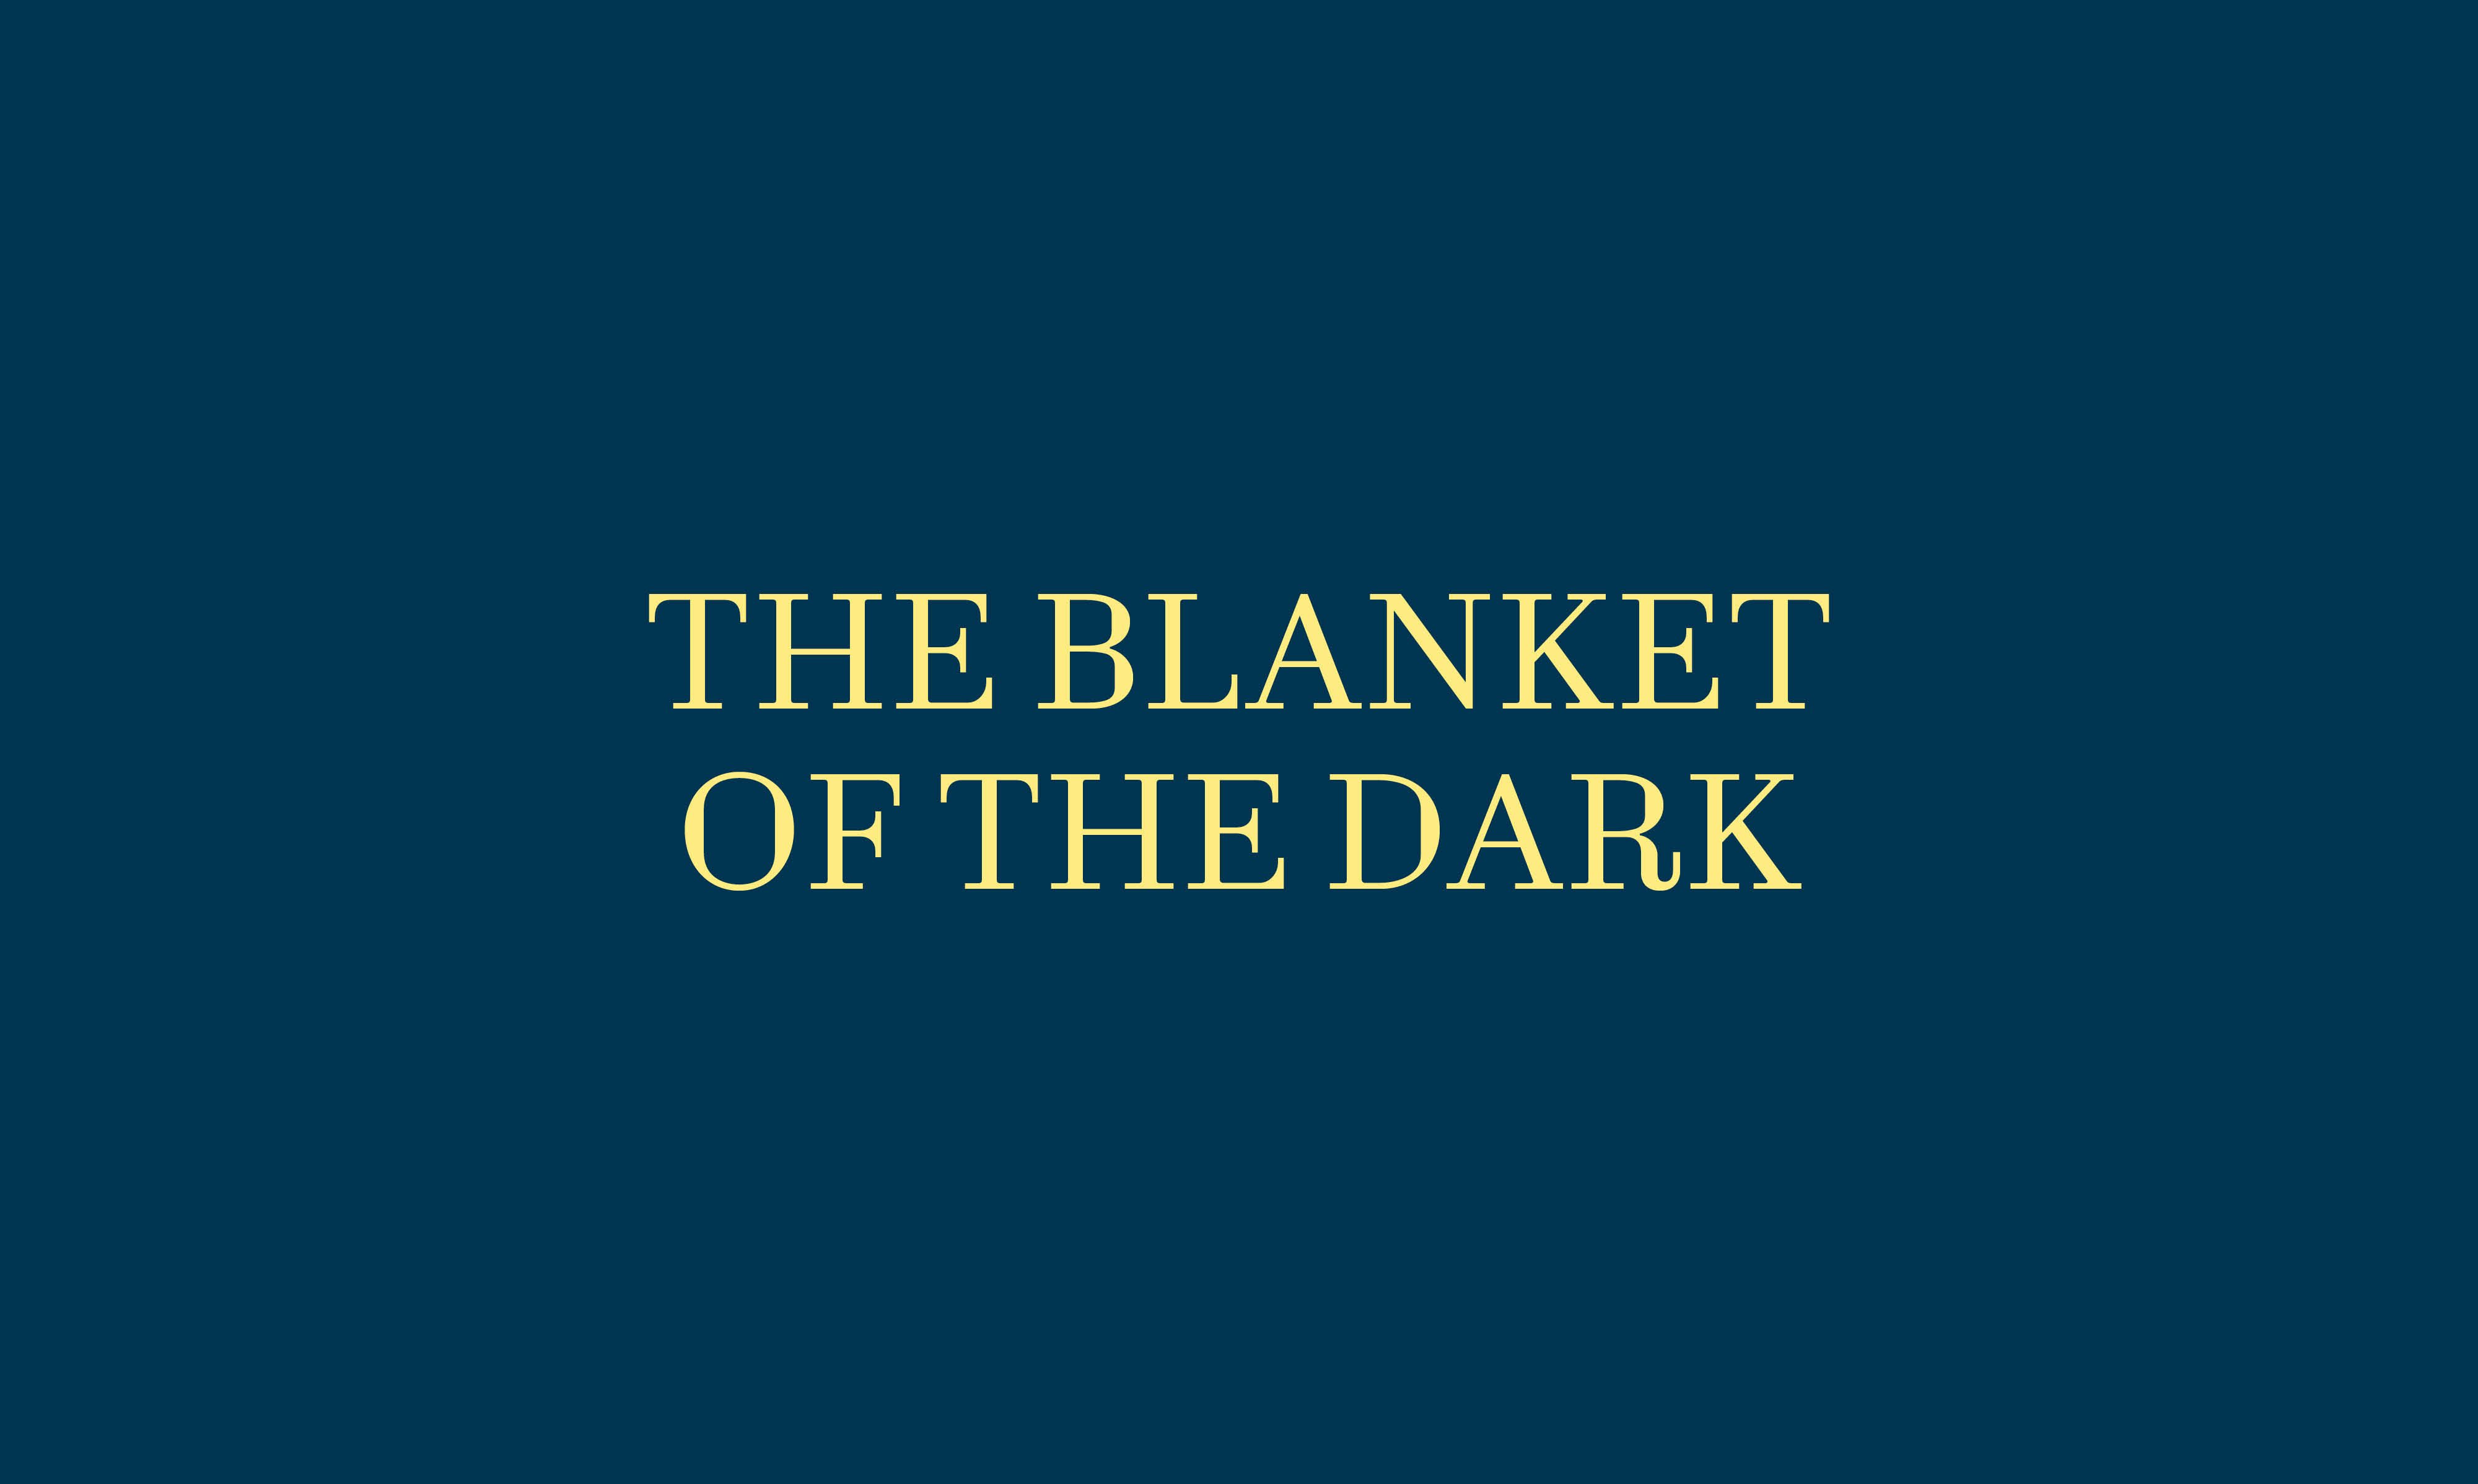 THE BLANKET OF THE DARK